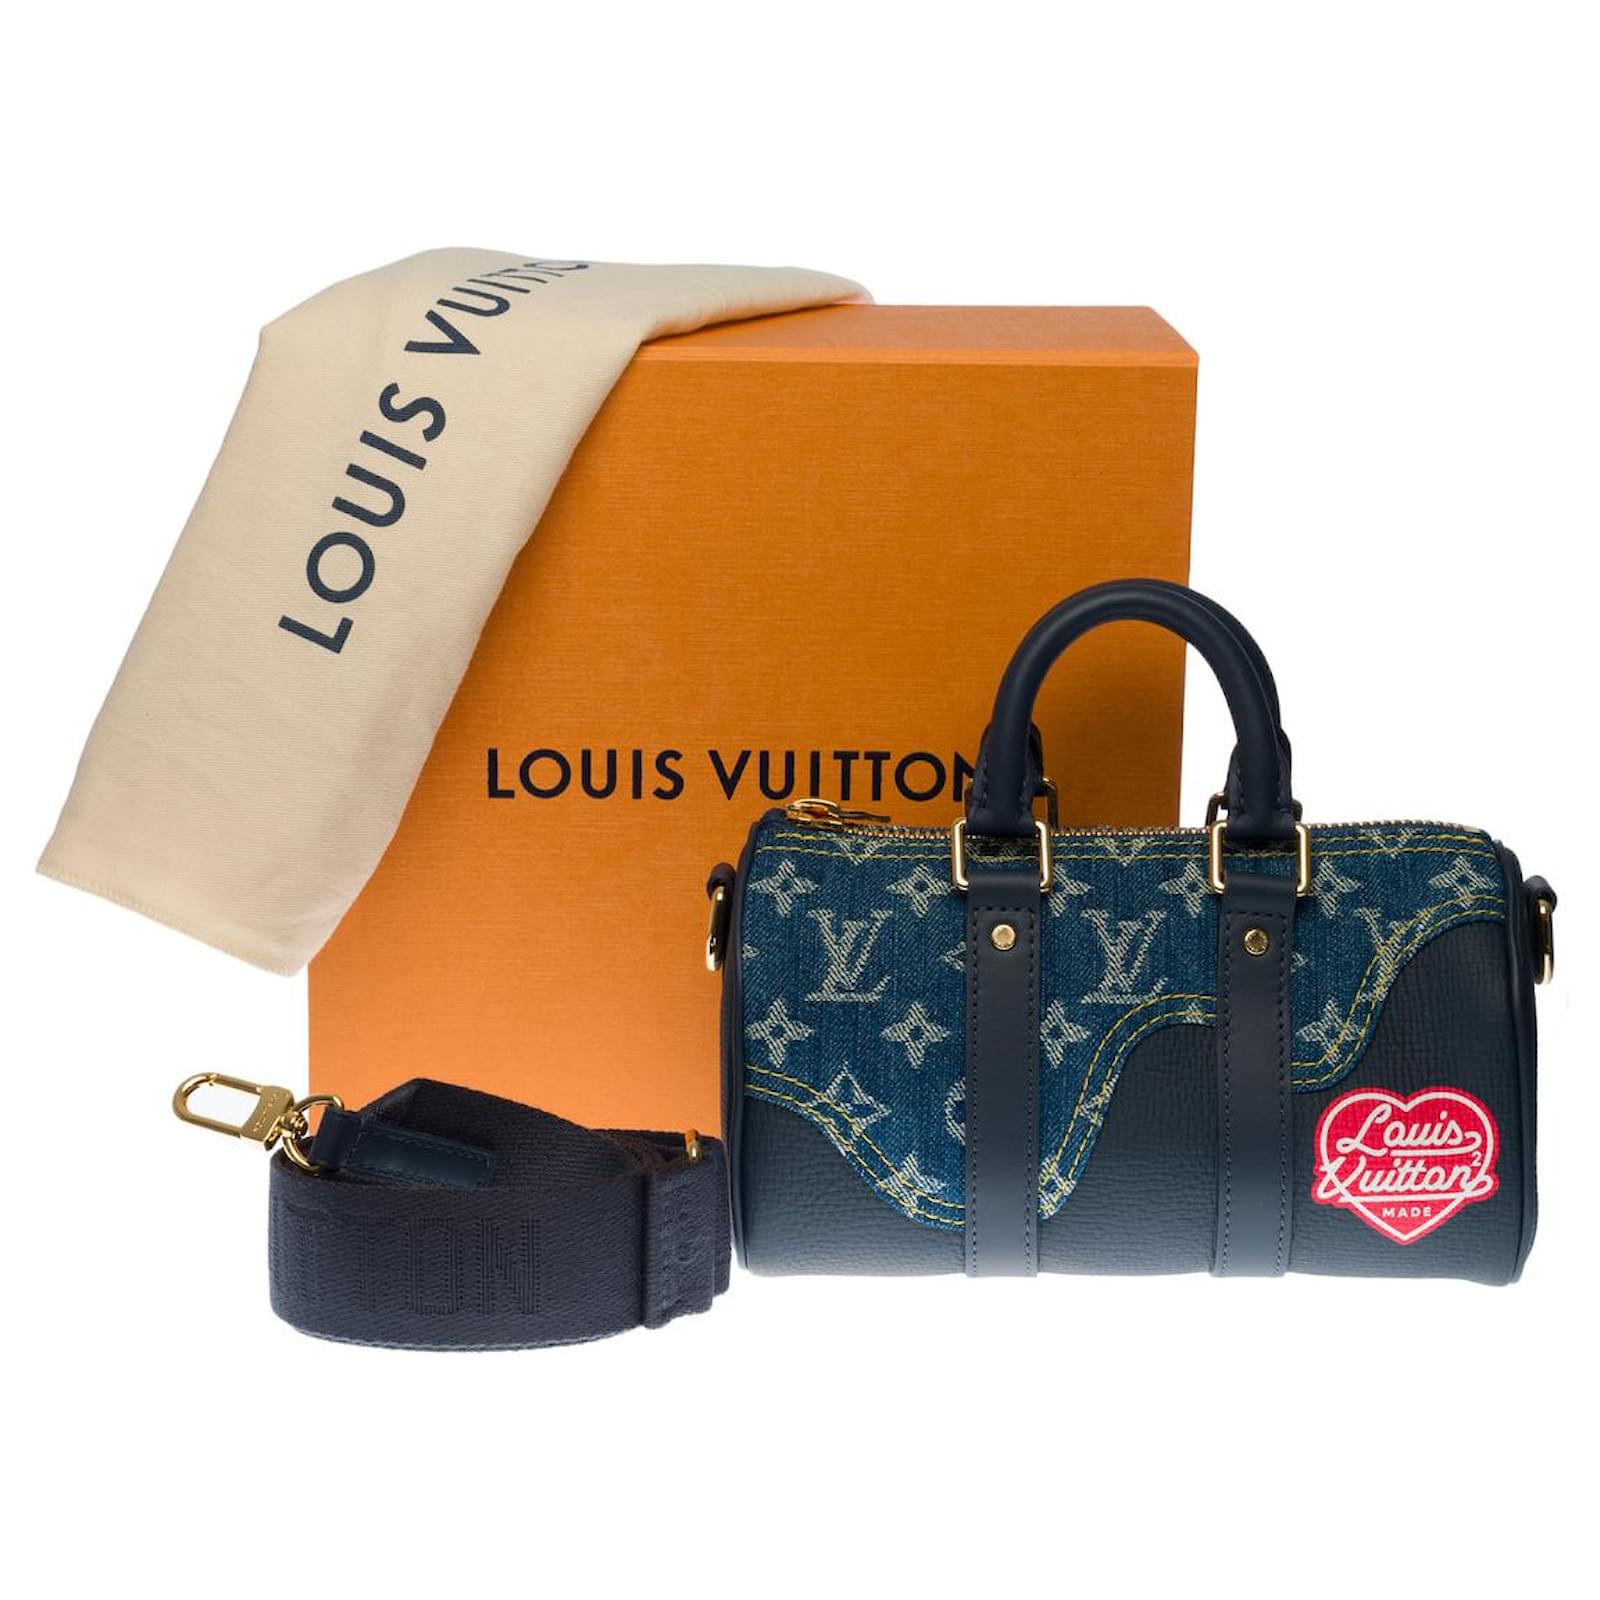 Virgil Abloh has reinvented 3 classic Louis Vuitton bags